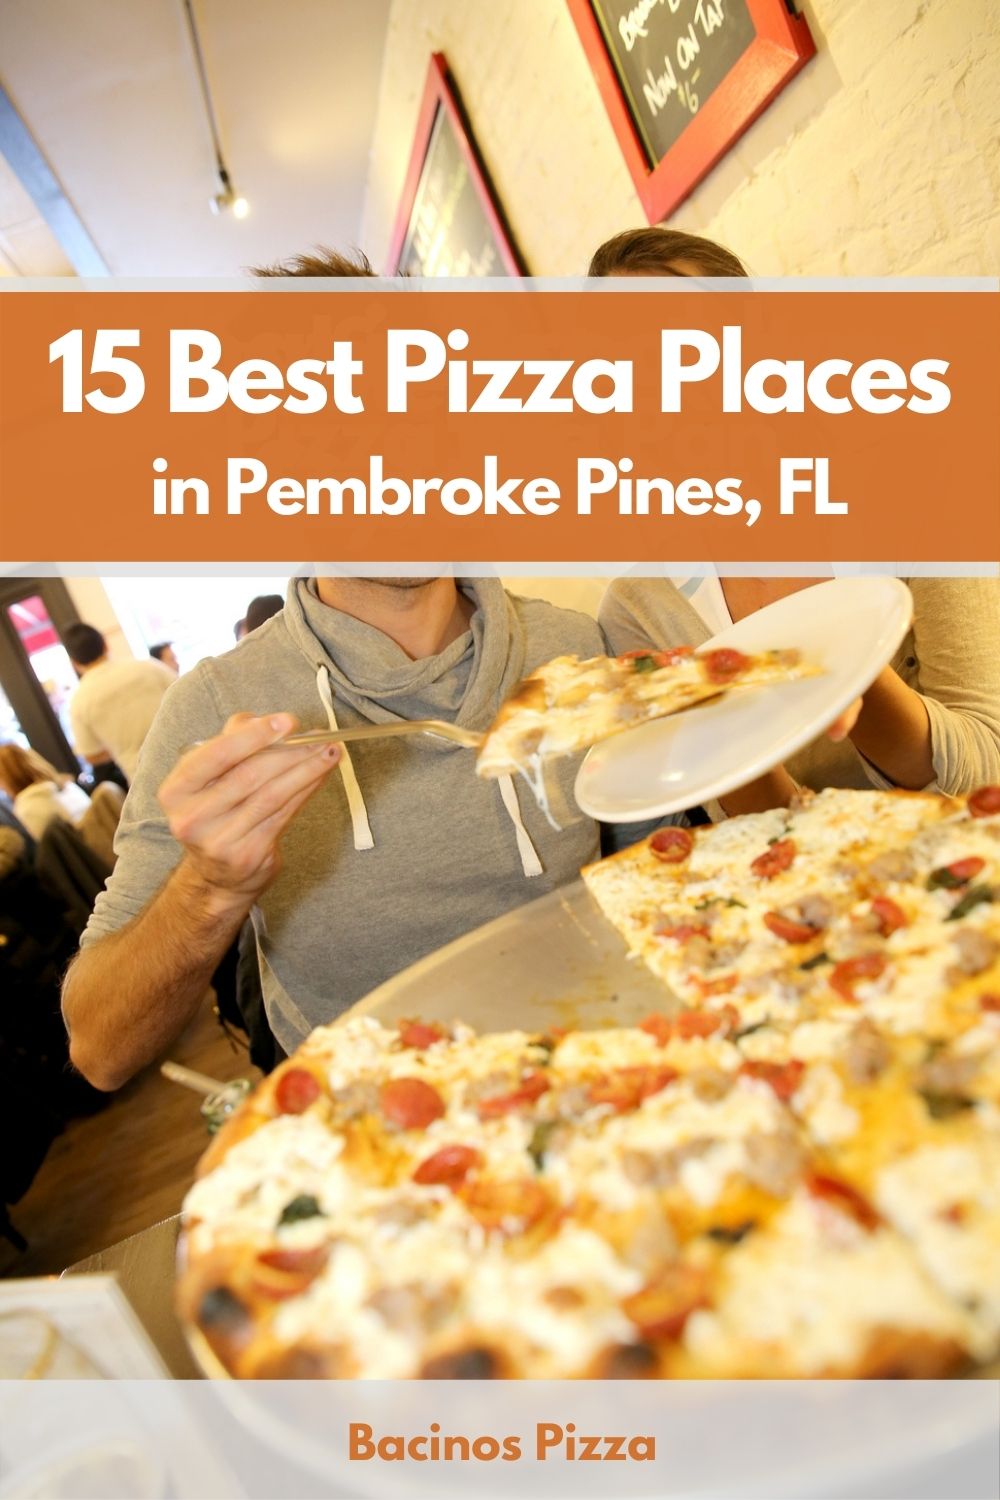 15 Best Pizza Places in Pembroke Pines, FL pin